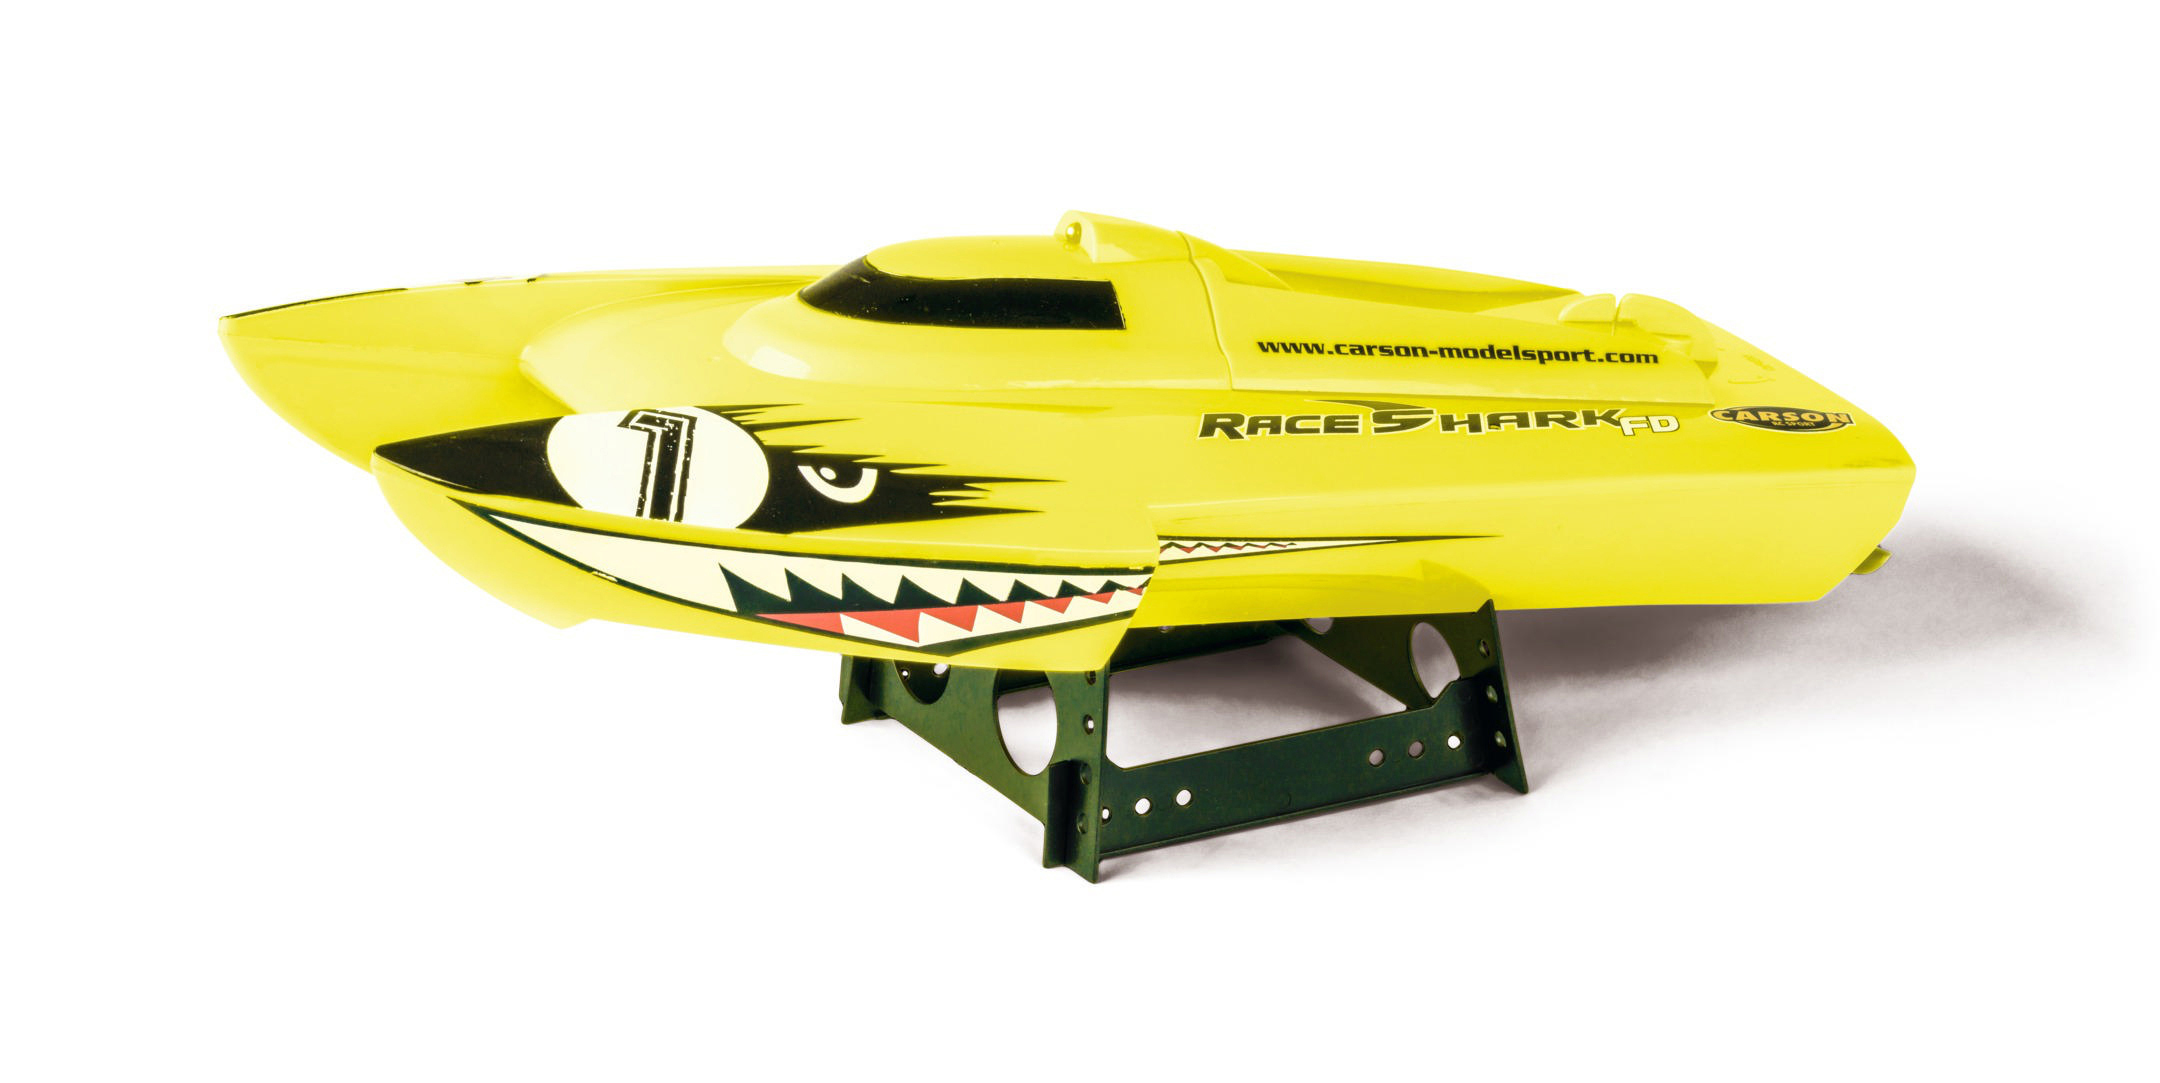 CARSON Race Shark FD Gelb Rennkatamaran Modell, 100% 2.4G RTR